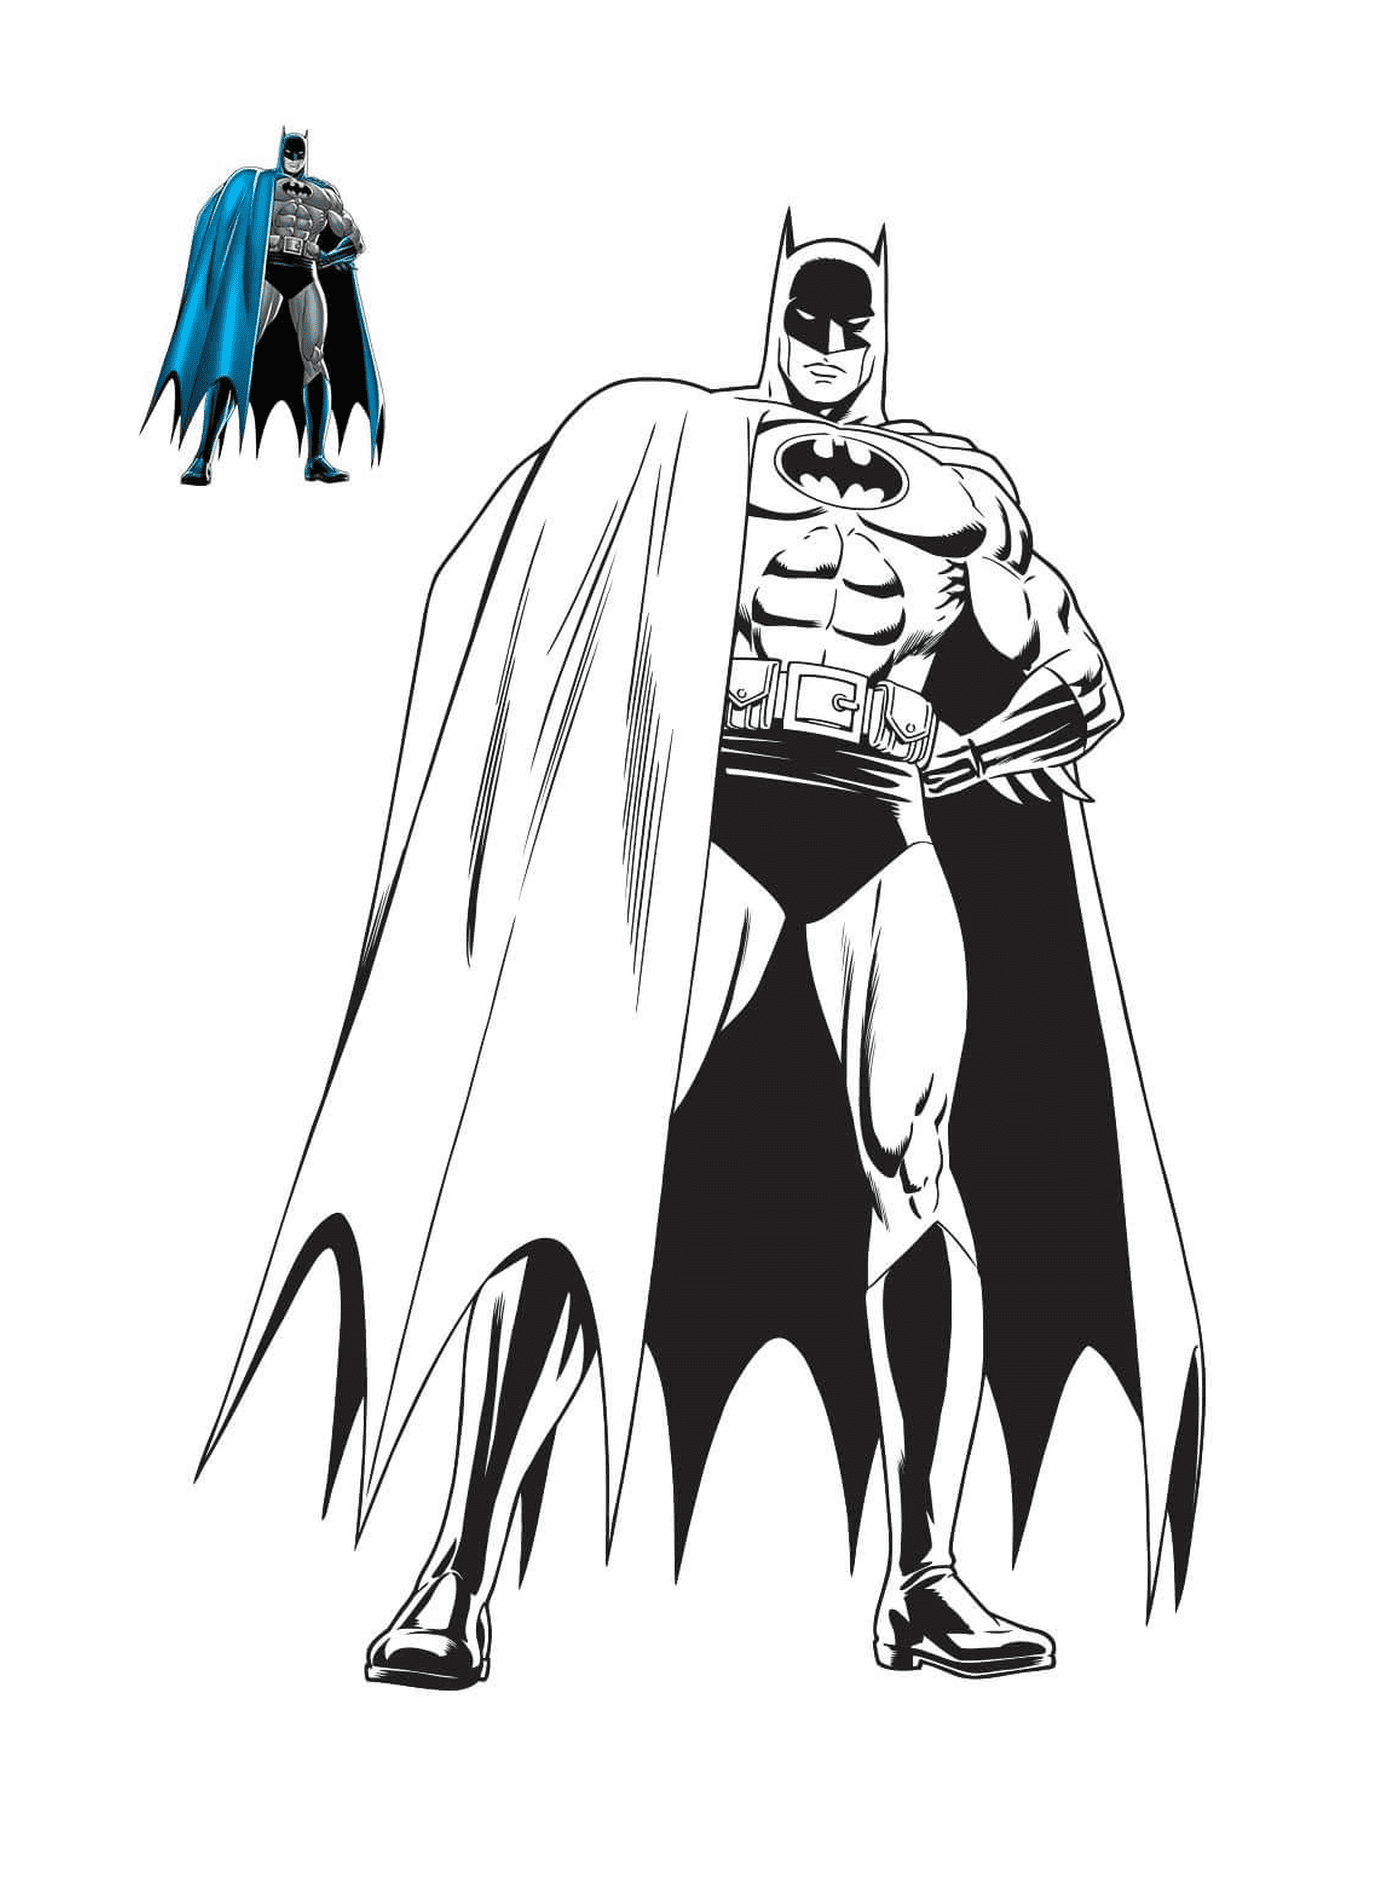  The bat man from DC Comics 